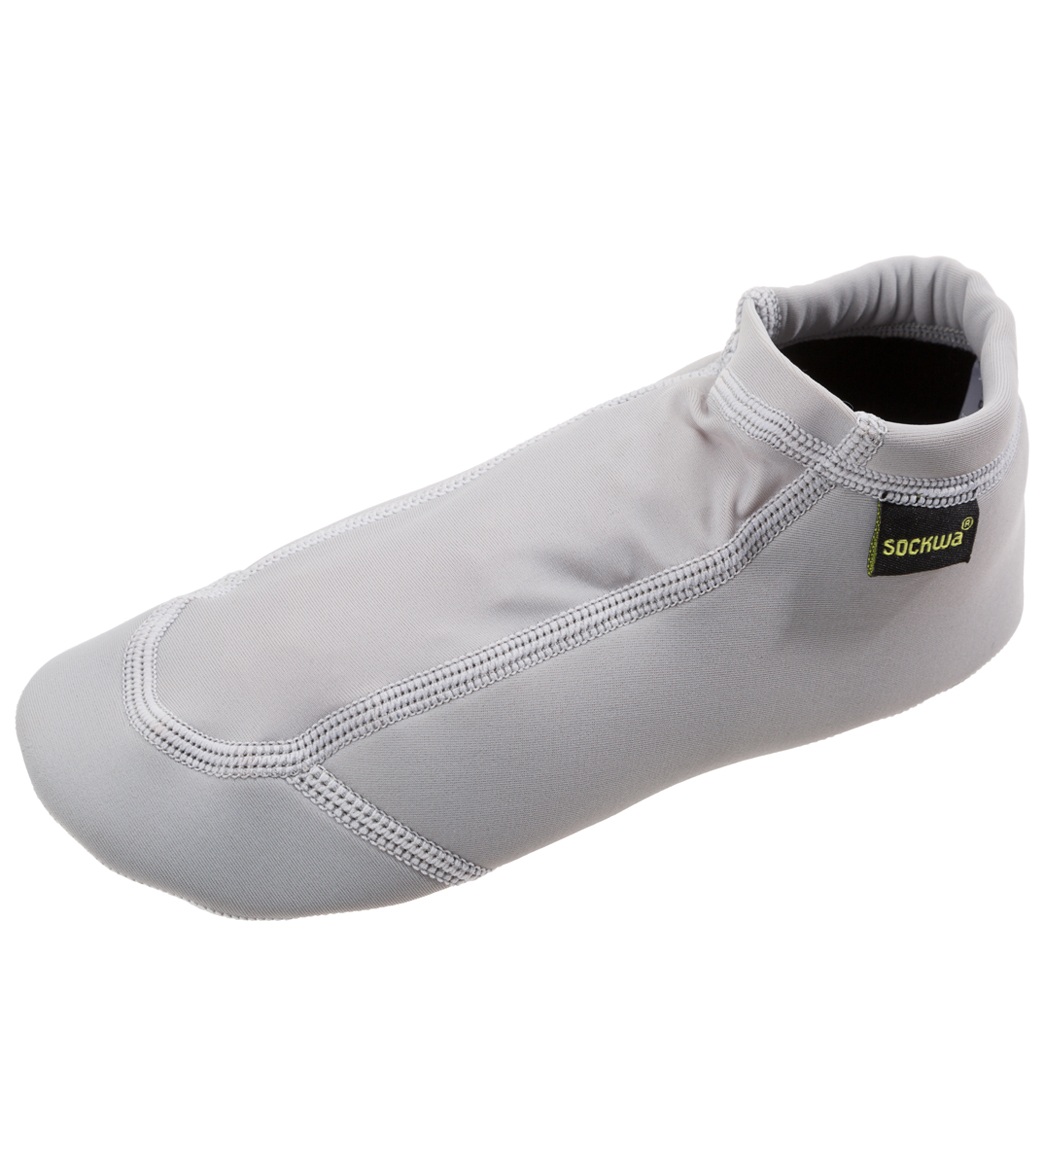 Sockwa Water Shoes Playa Lo Aqua Socks - Grey W7/M6 Neoprene/Nylon - Swimoutlet.com